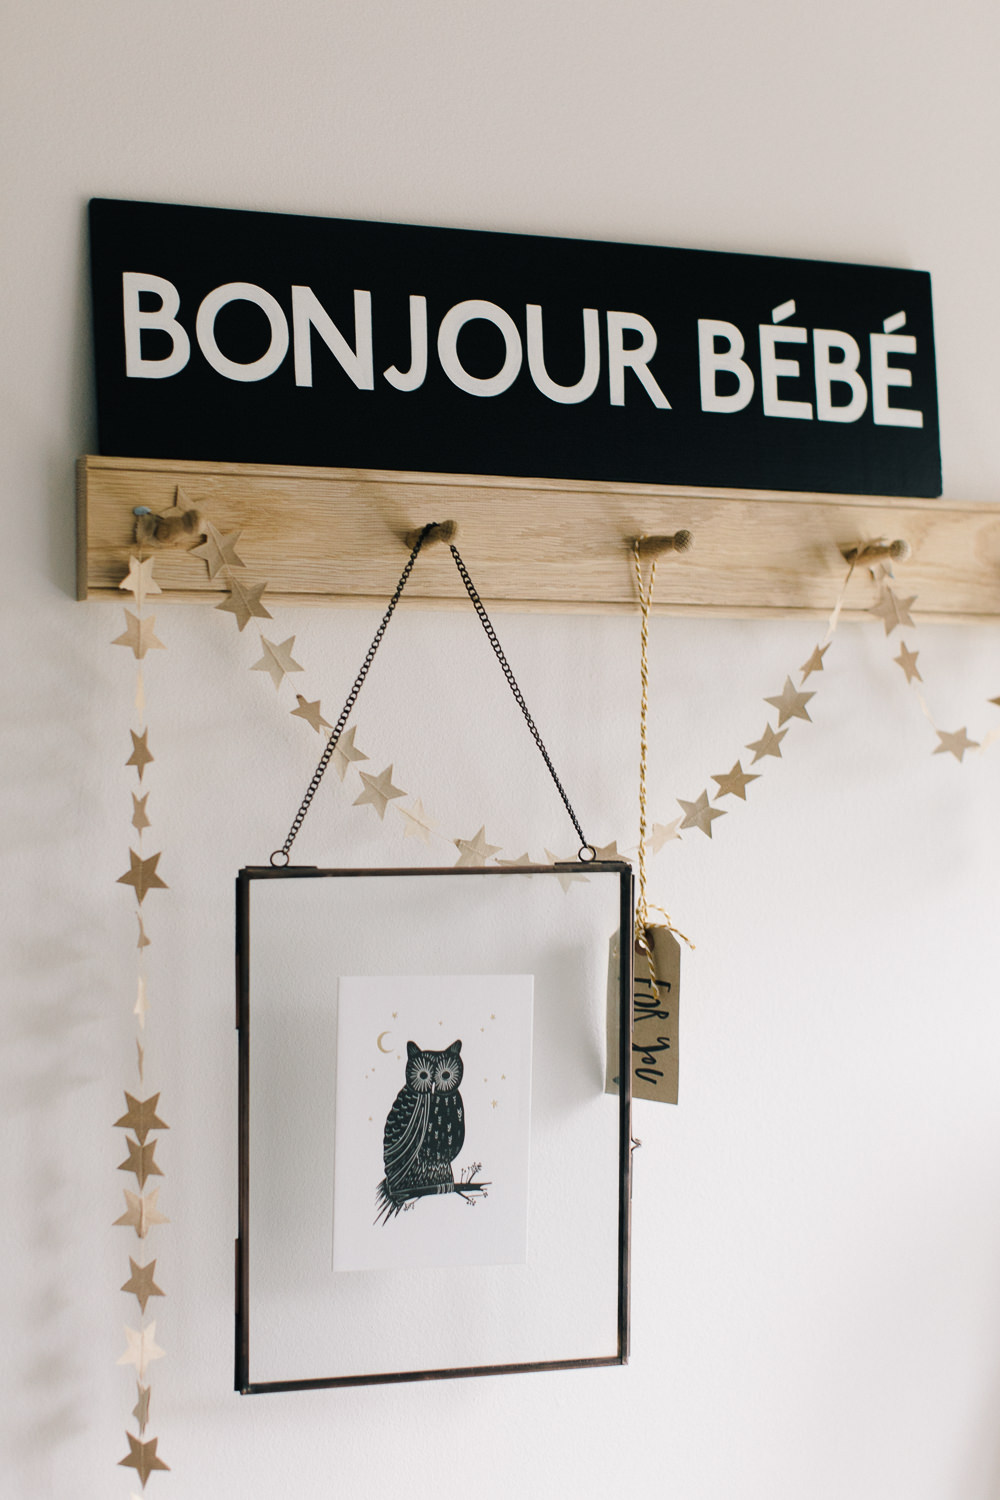 Oak peg rack with Bonjour Bebe sign and handmade star garland